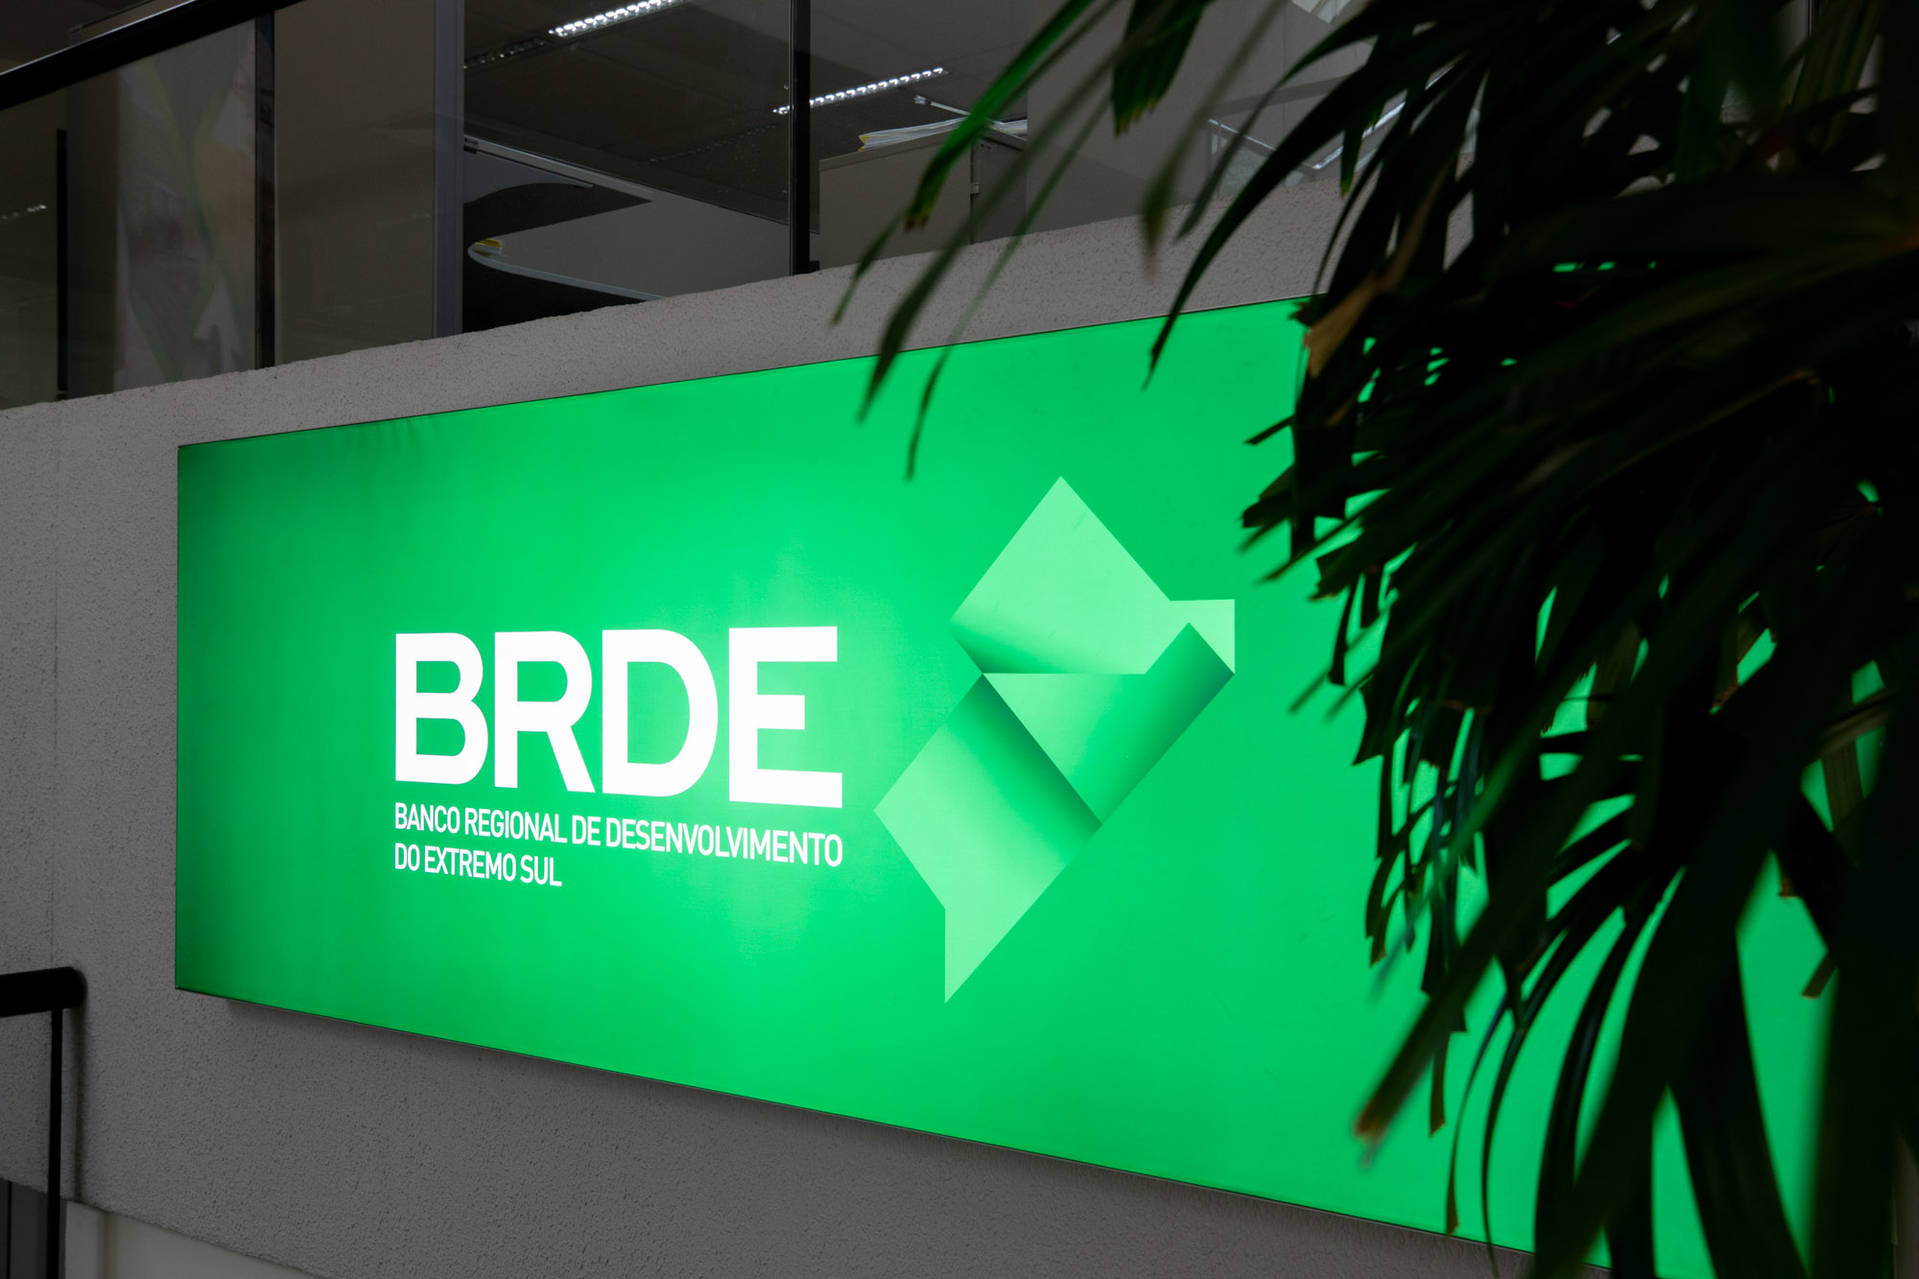 BRDE Labs une soluções de startups às necessidades de cooperativas agroindustriais